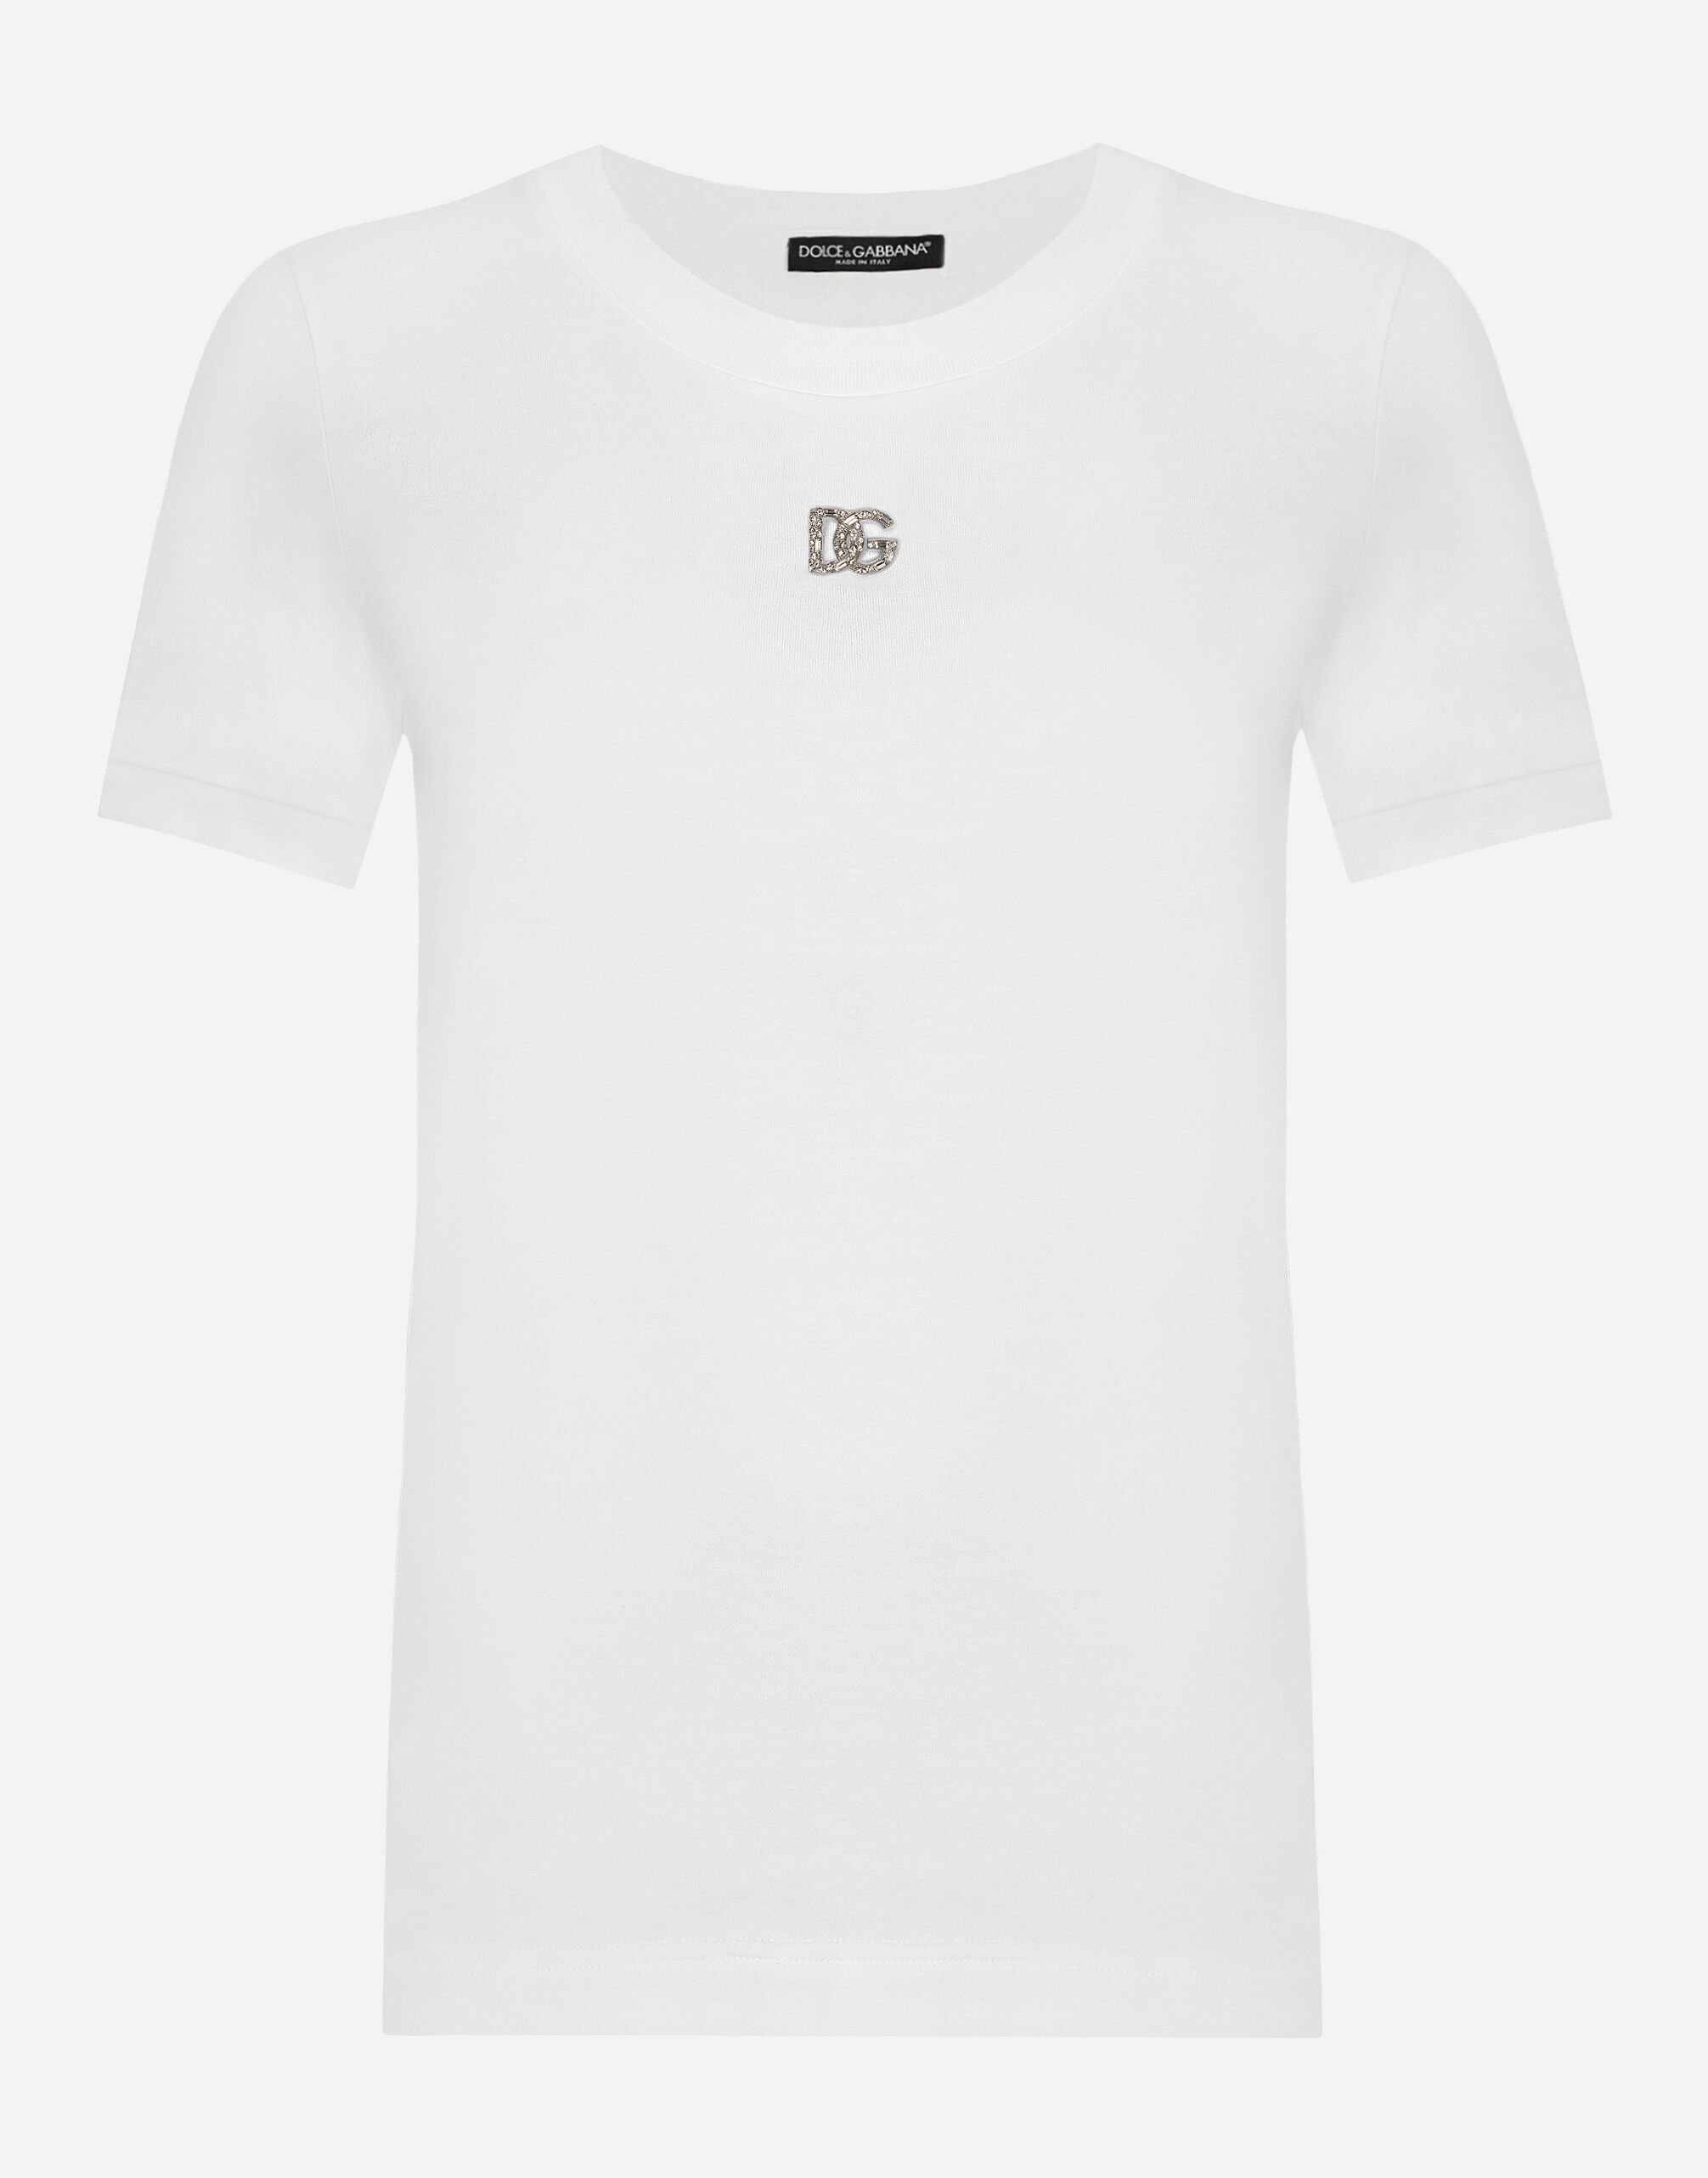 Dolce & Gabbana Cotton T-shirt with Crystal DG logo White F9R58ZGDCBG